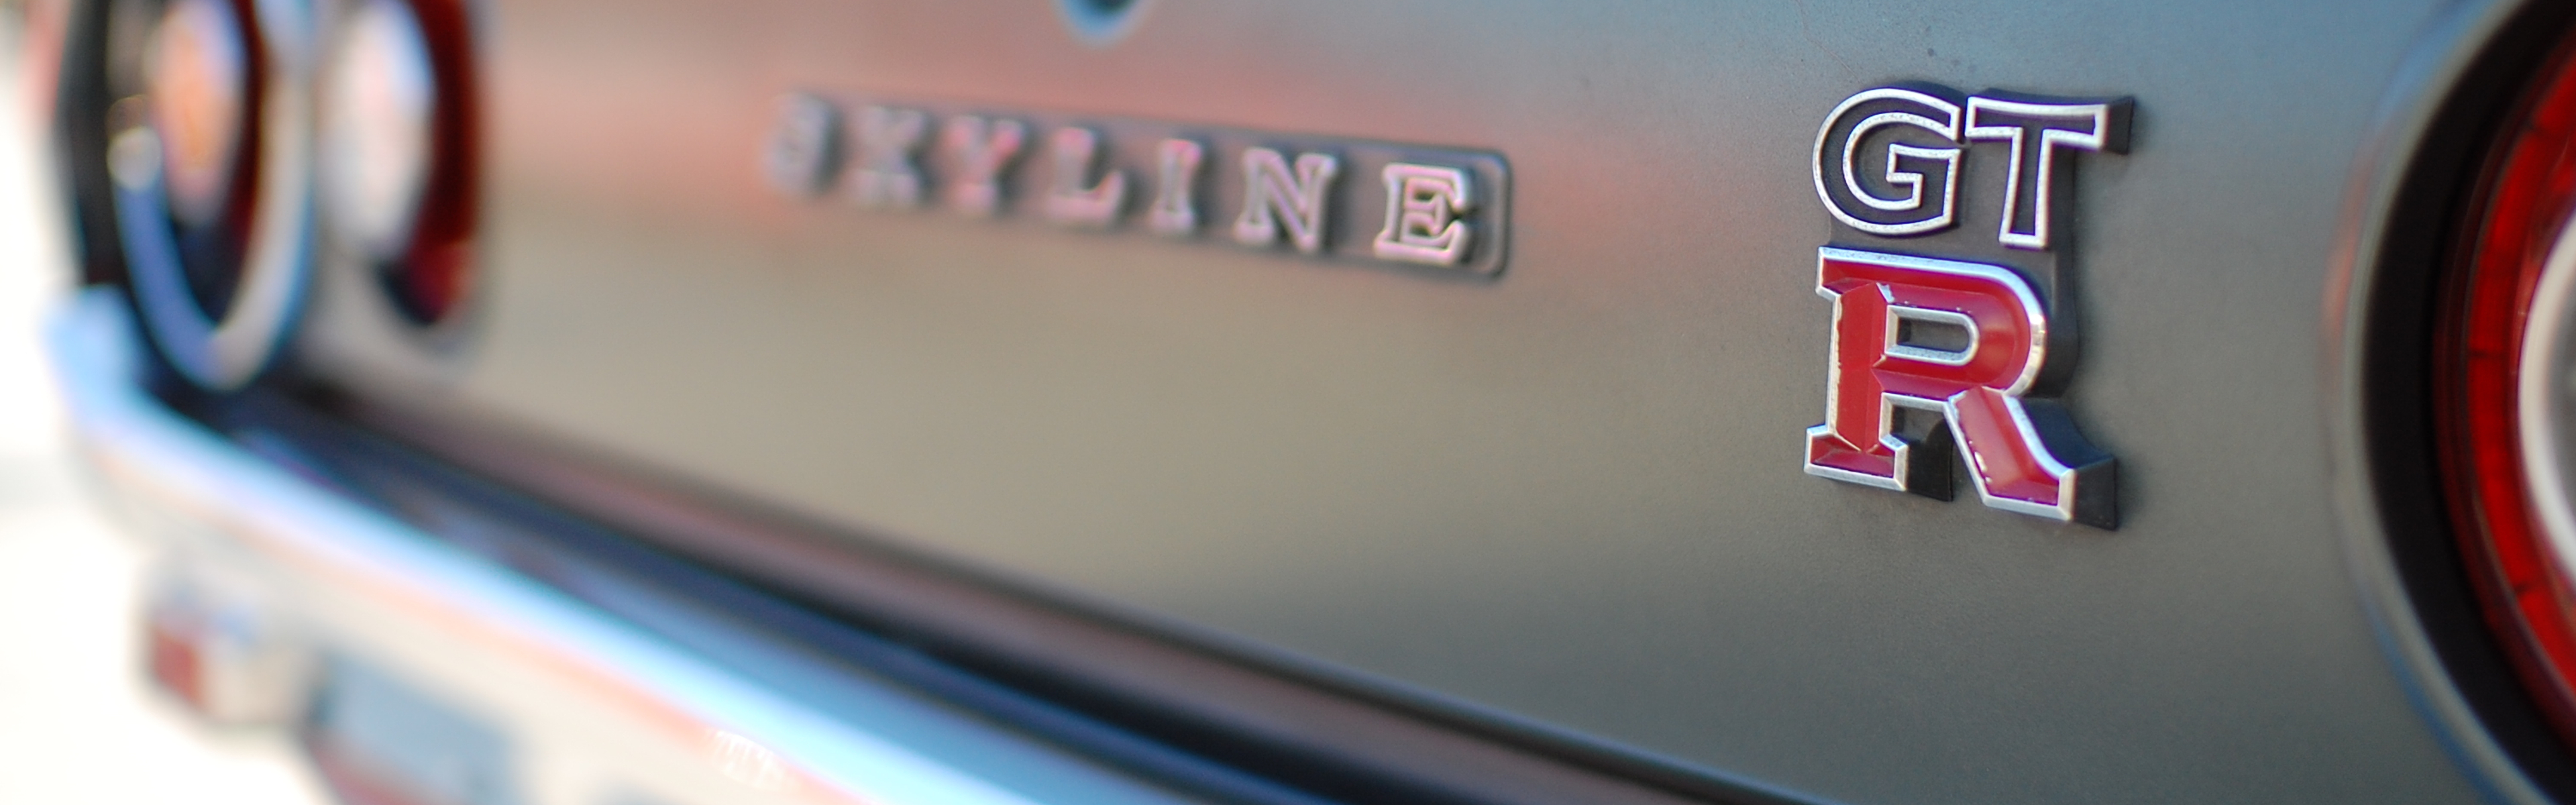 Nissan Skyline Gt R 3840x1200